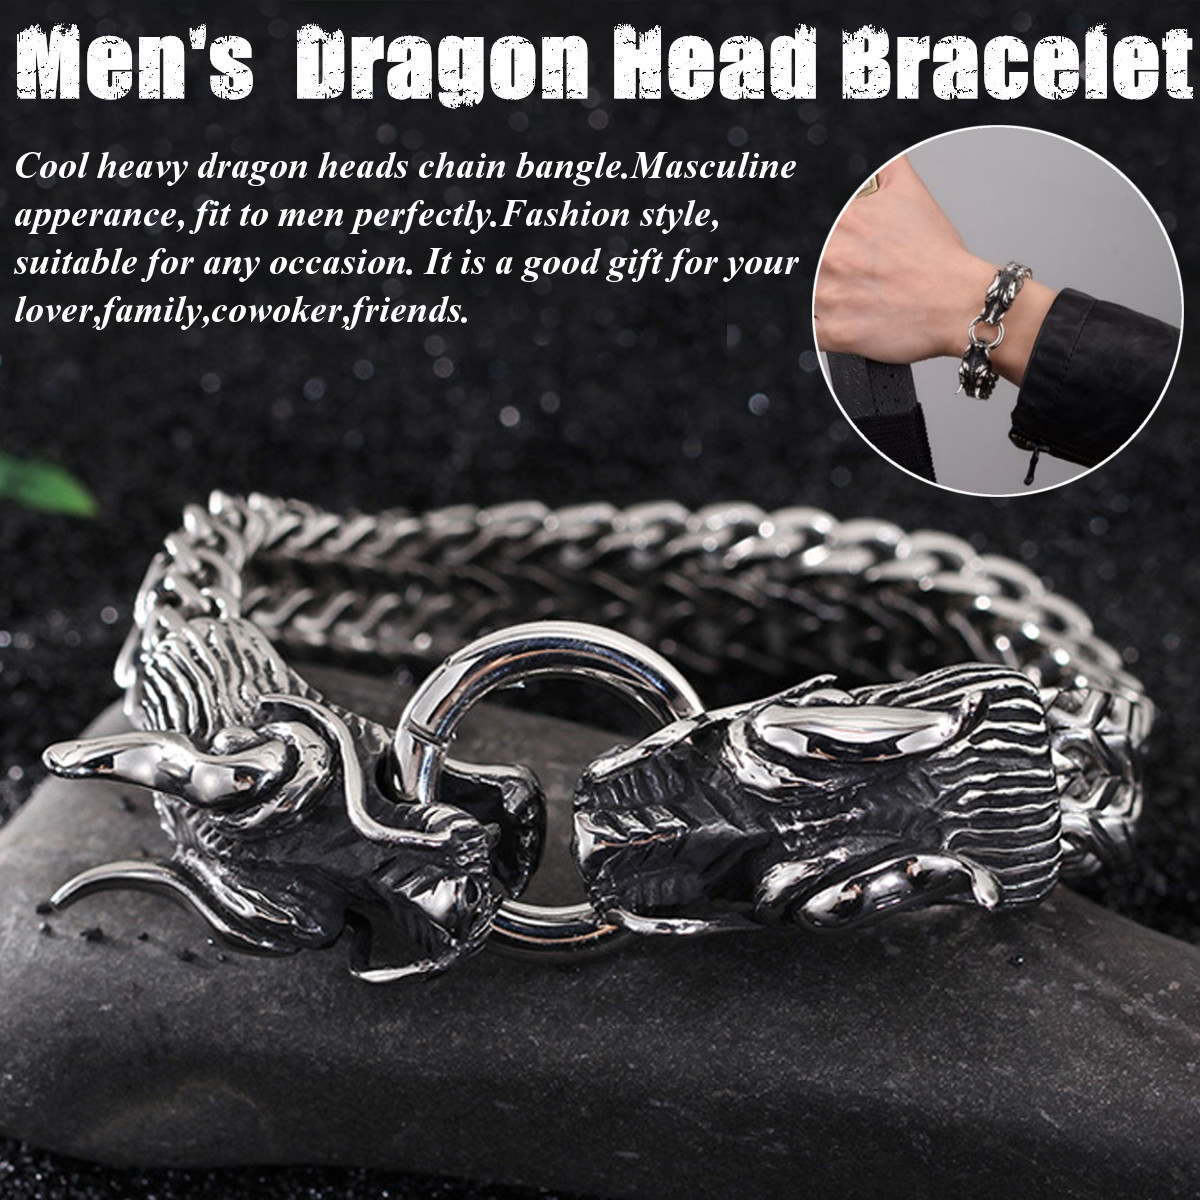 Aokarry Jewelry Men Stainless Steel Bracelet Bangle Bracelet Dragons Head Silver Length-24CM